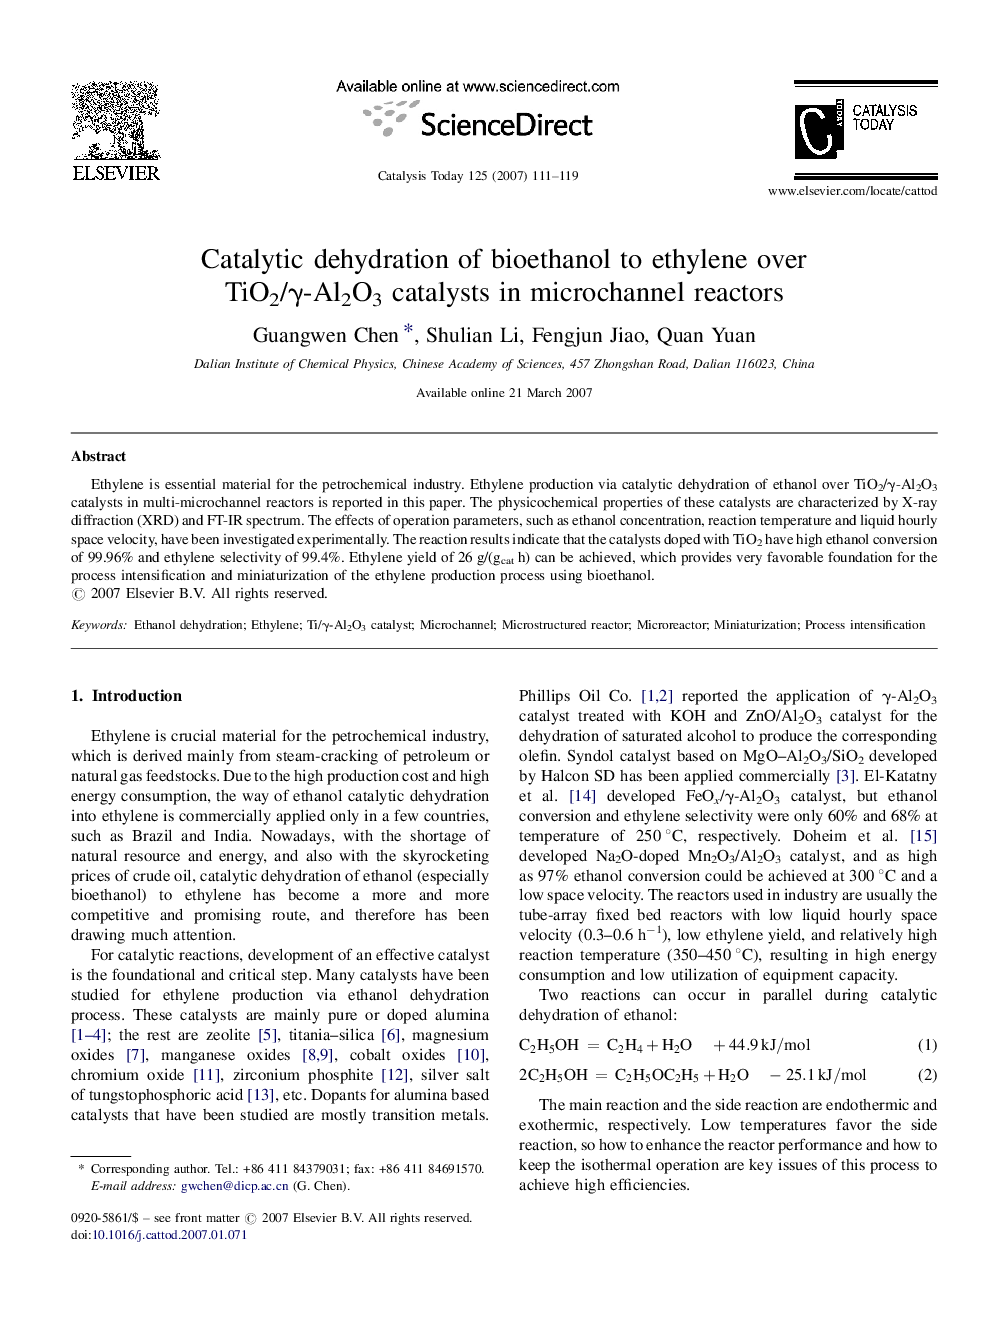 Catalytic dehydration of bioethanol to ethylene over TiO2/γ-Al2O3 catalysts in microchannel reactors